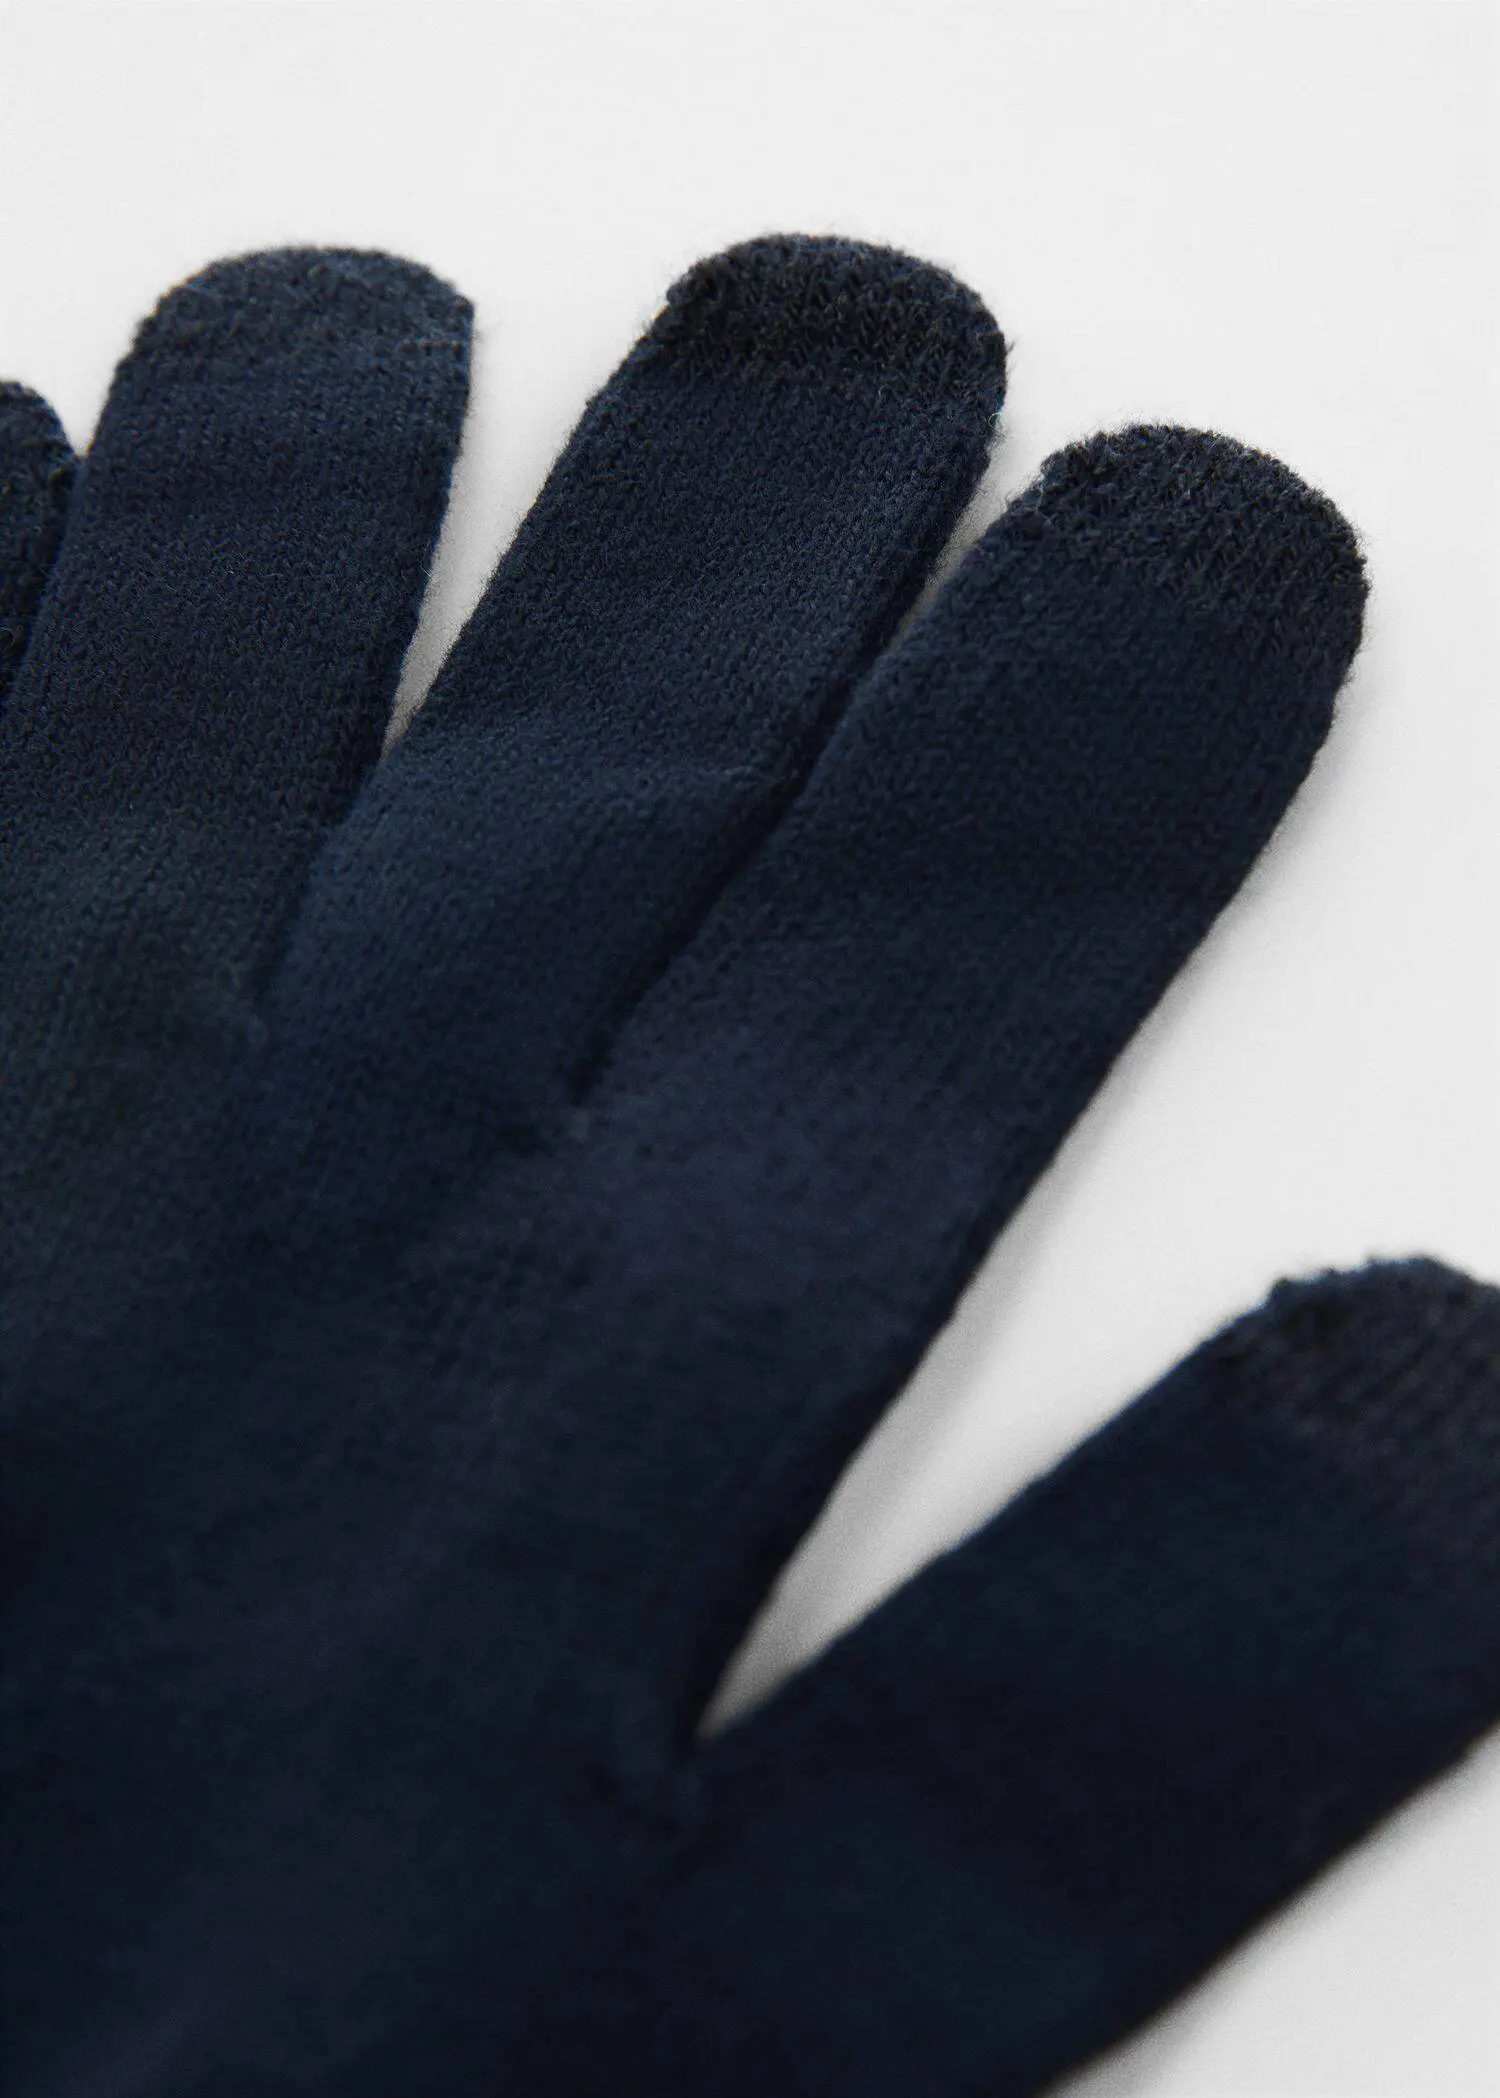 Mango Touchscreen knitted gloves. 2